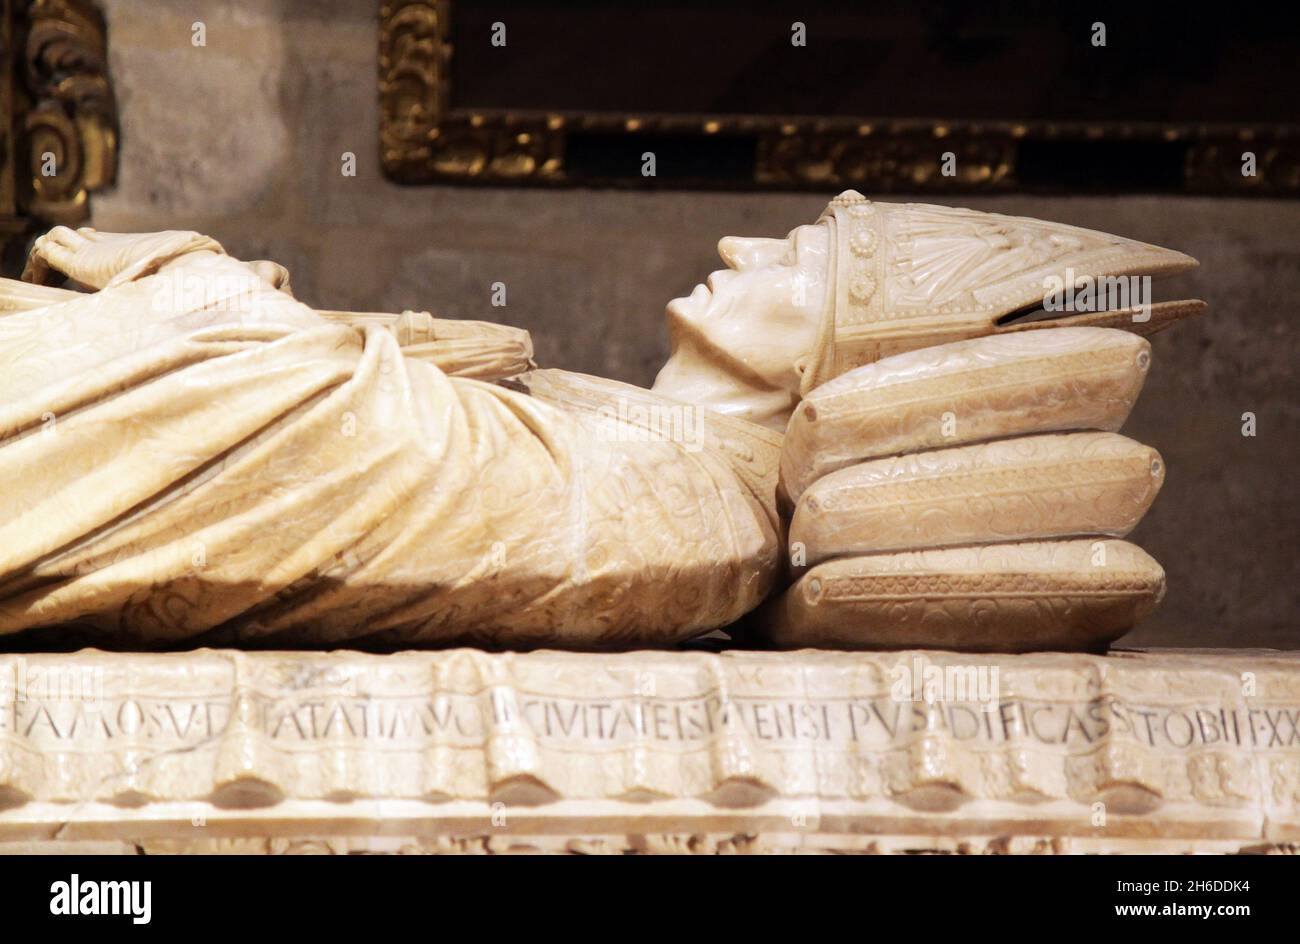 Sepulchre of Cardinal Sir Juan de Cervantes,built in alabaster by Lorenzo Mercadante de Bretana between 1453 and 1458. Stock Photo